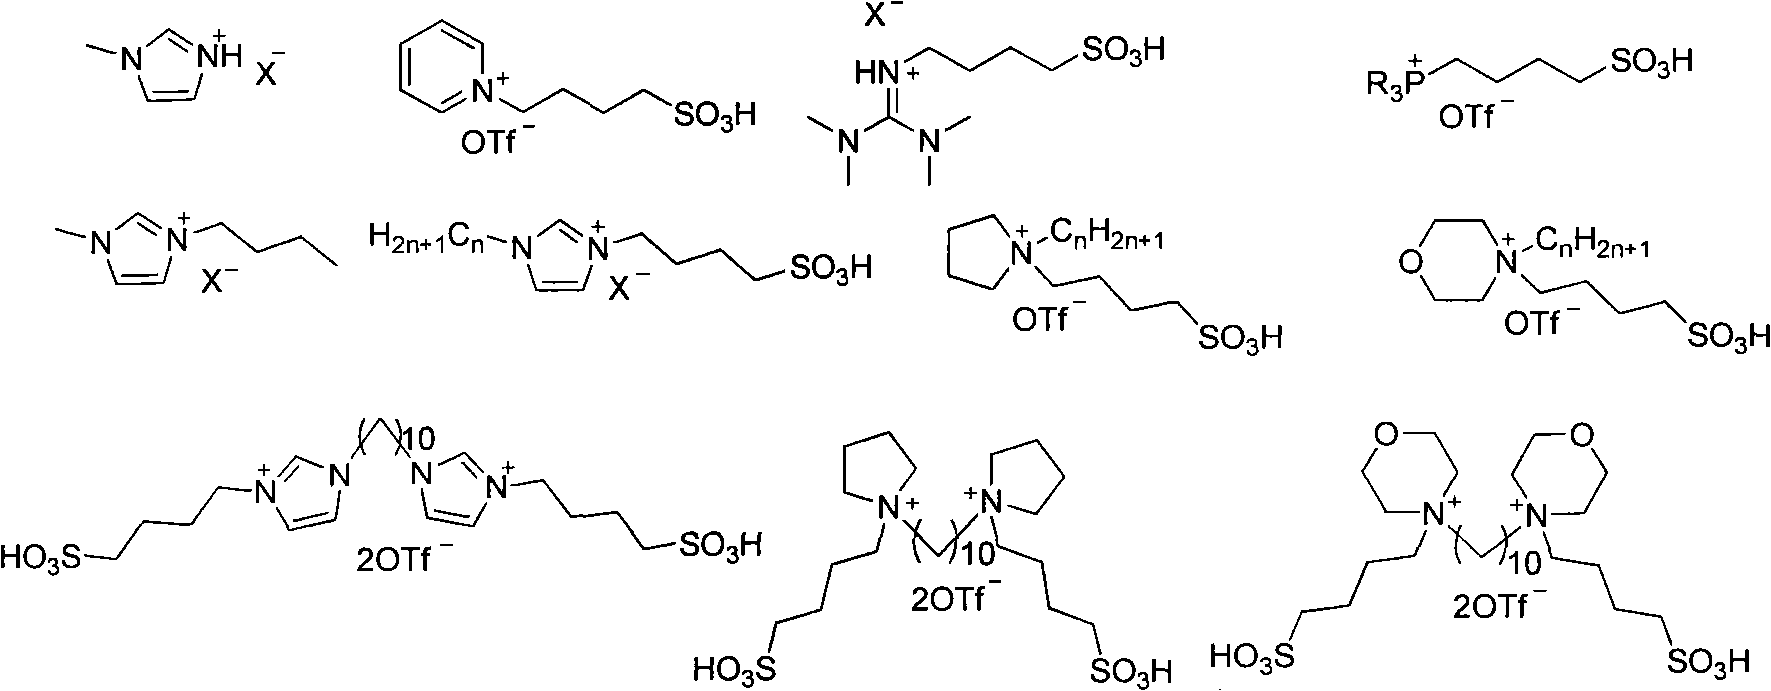 Method for synthesizing amine compound catalyzed by functionalized ionic liquid